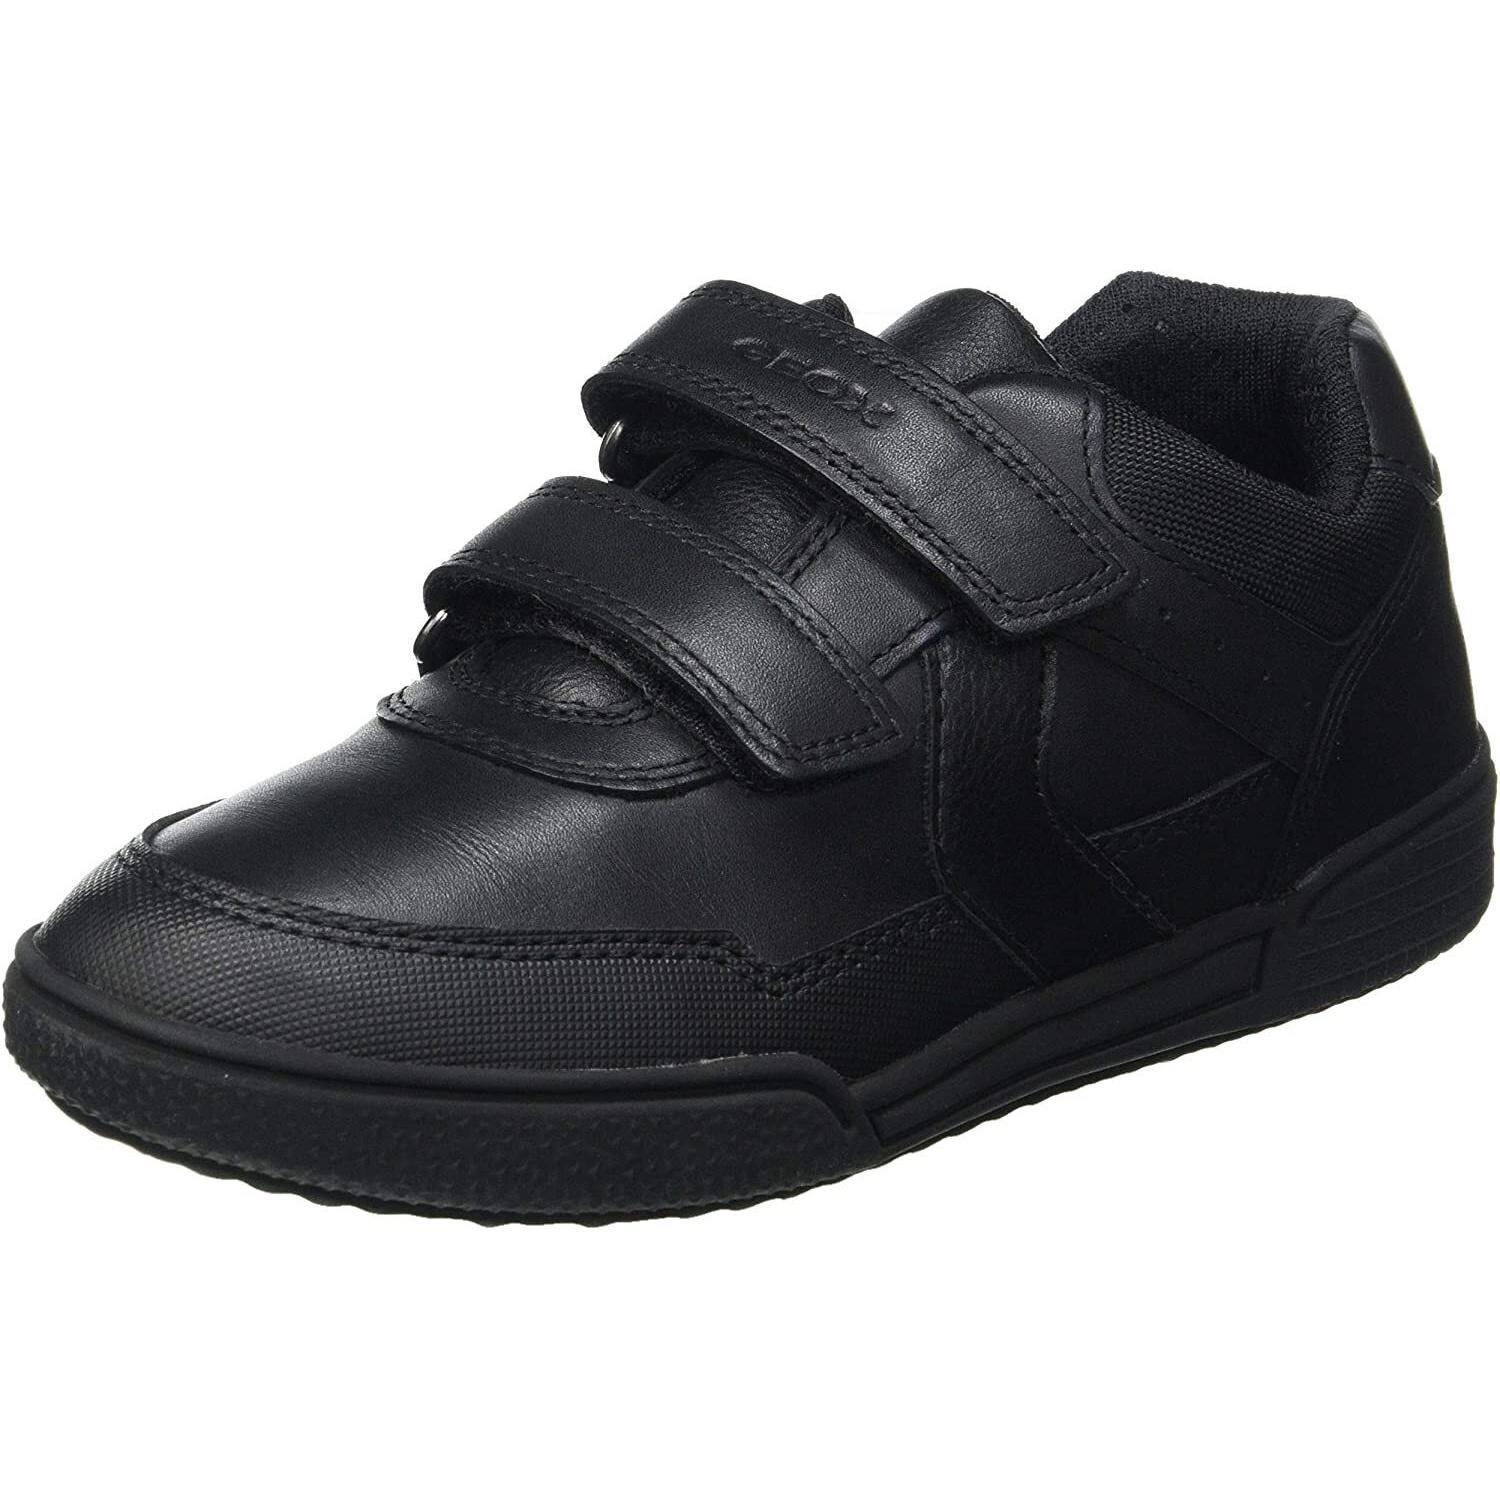 Geox Boys Poseido Leather School Shoes (Black) (1 UK)